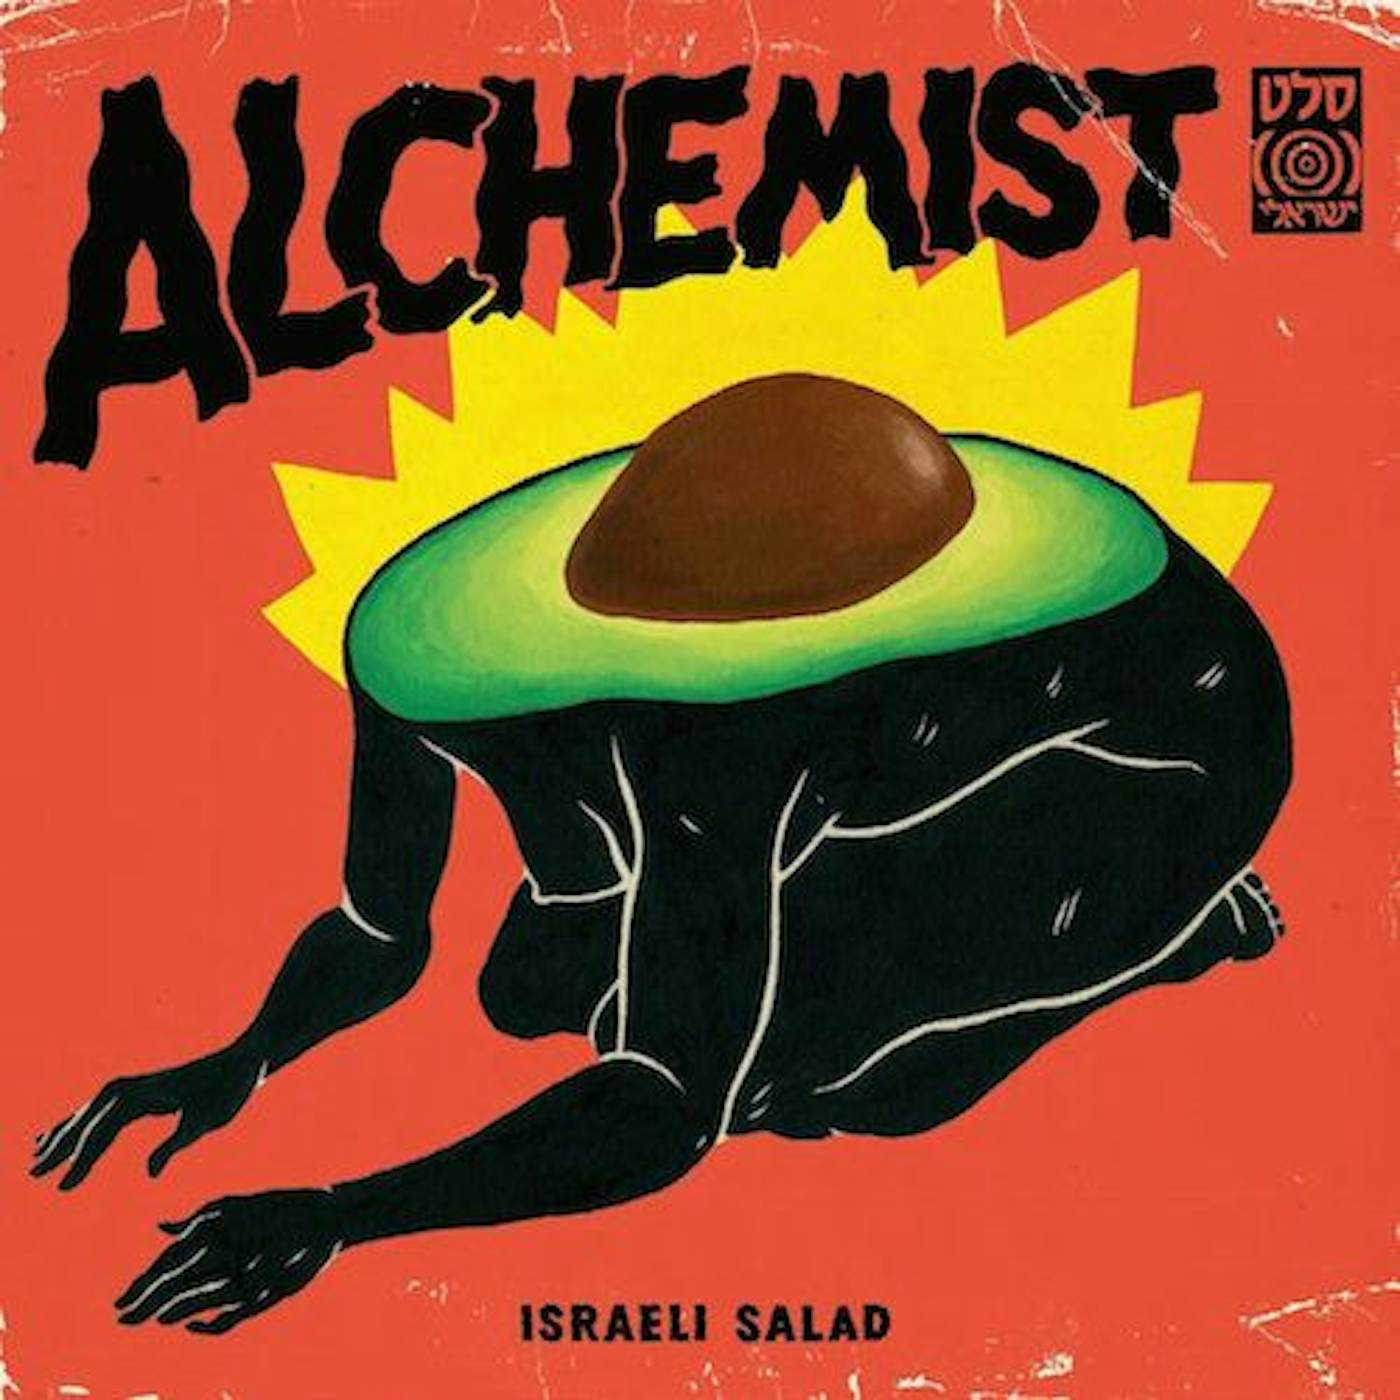 The Alchemist ISRAELI SALAD Vinyl Record - Colored Vinyl, Deluxe Edition